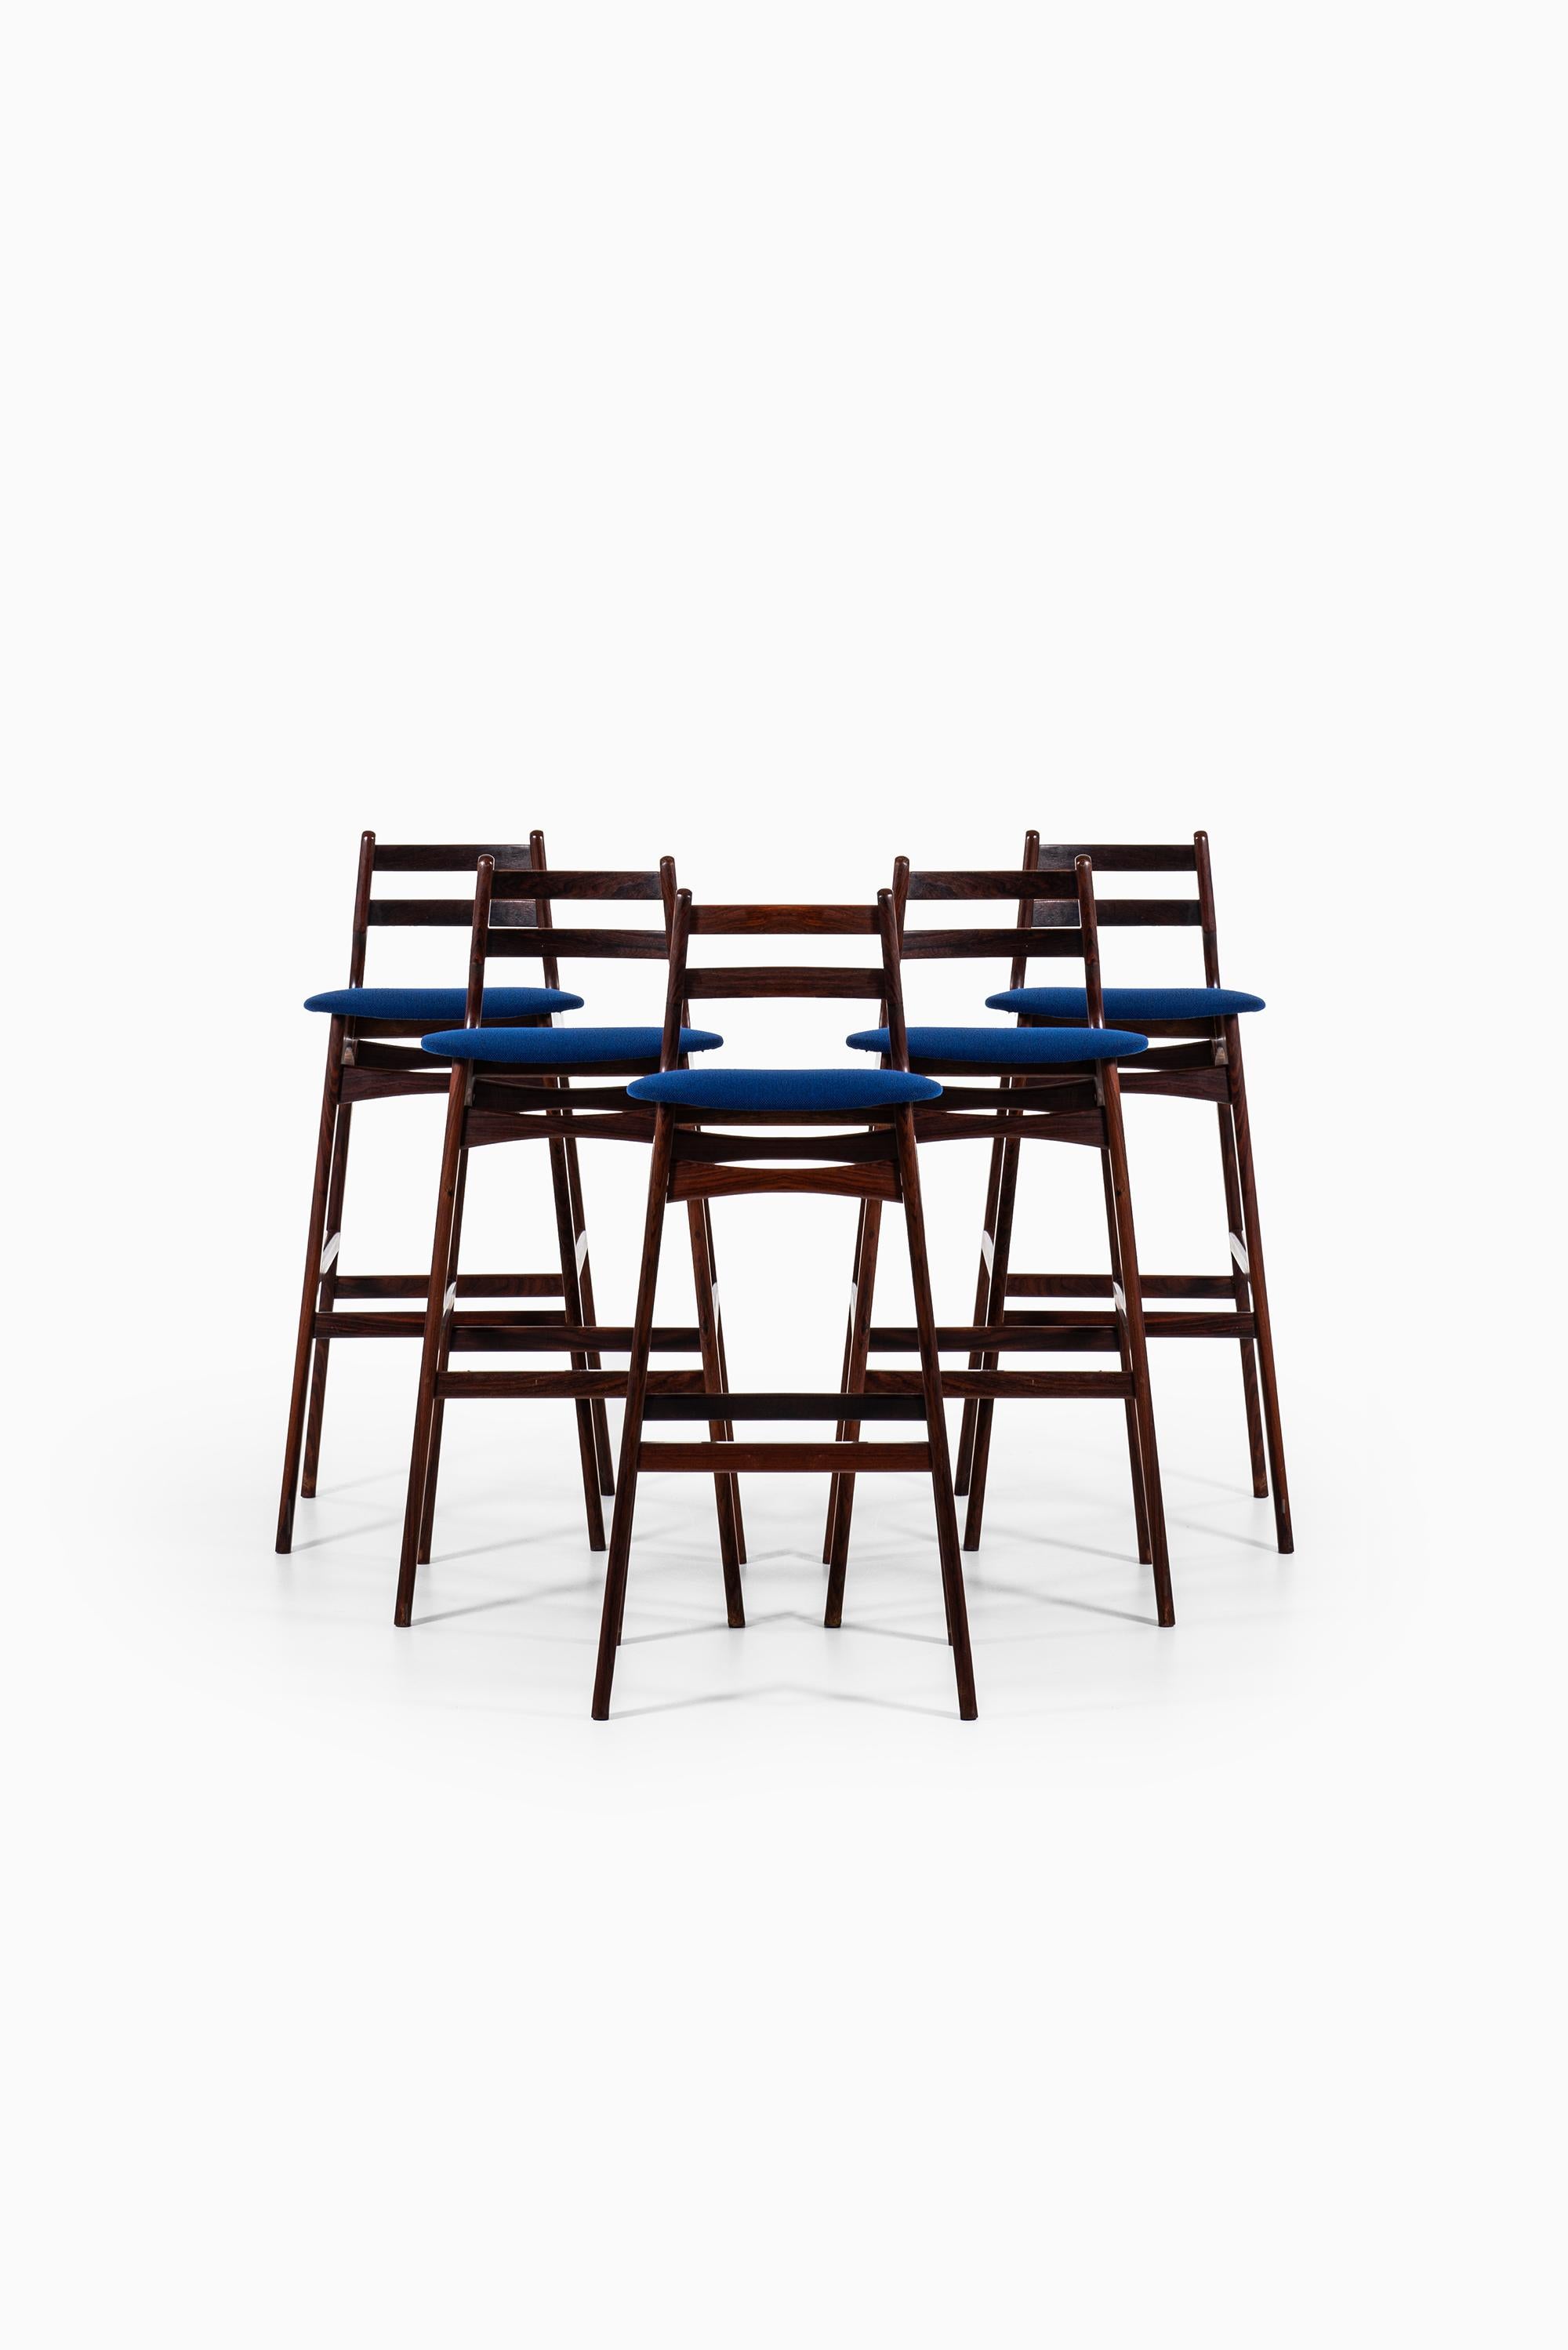 Set of 5 bar stools. Produced by Niels Bachs møbelfabrik in Denmark.